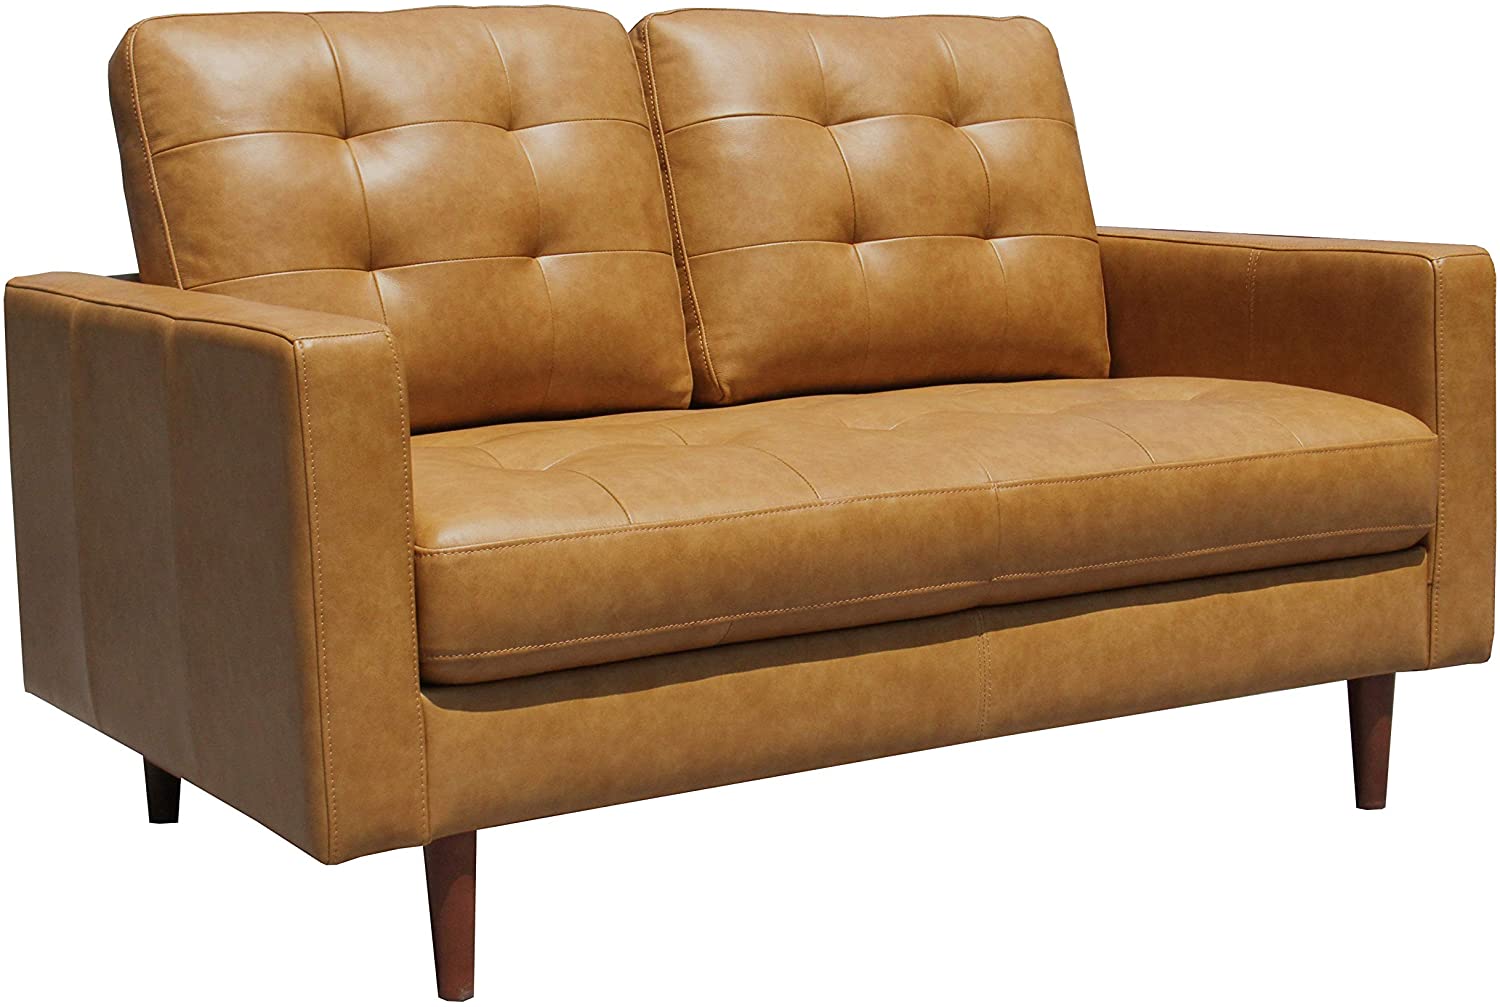 Rivet Cove Mid-Century Modern Tufted Leather Loveseat Sofa